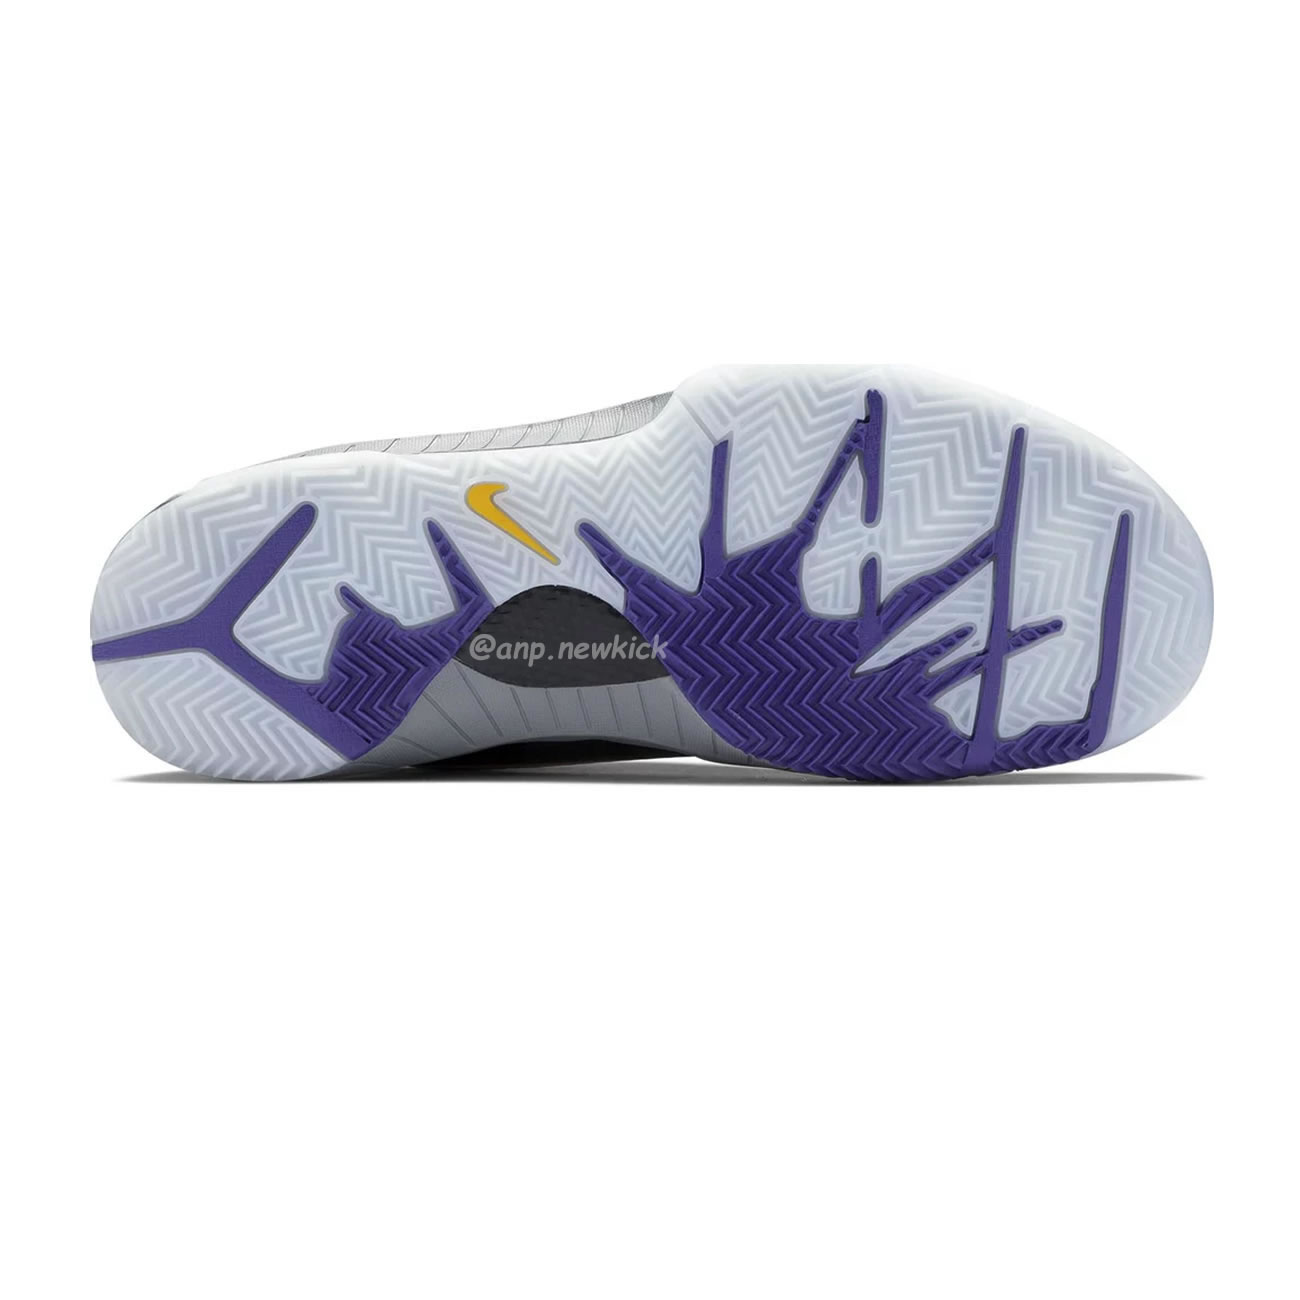 Nike Kobe 4 Protro Carpe Diem AV6339-001